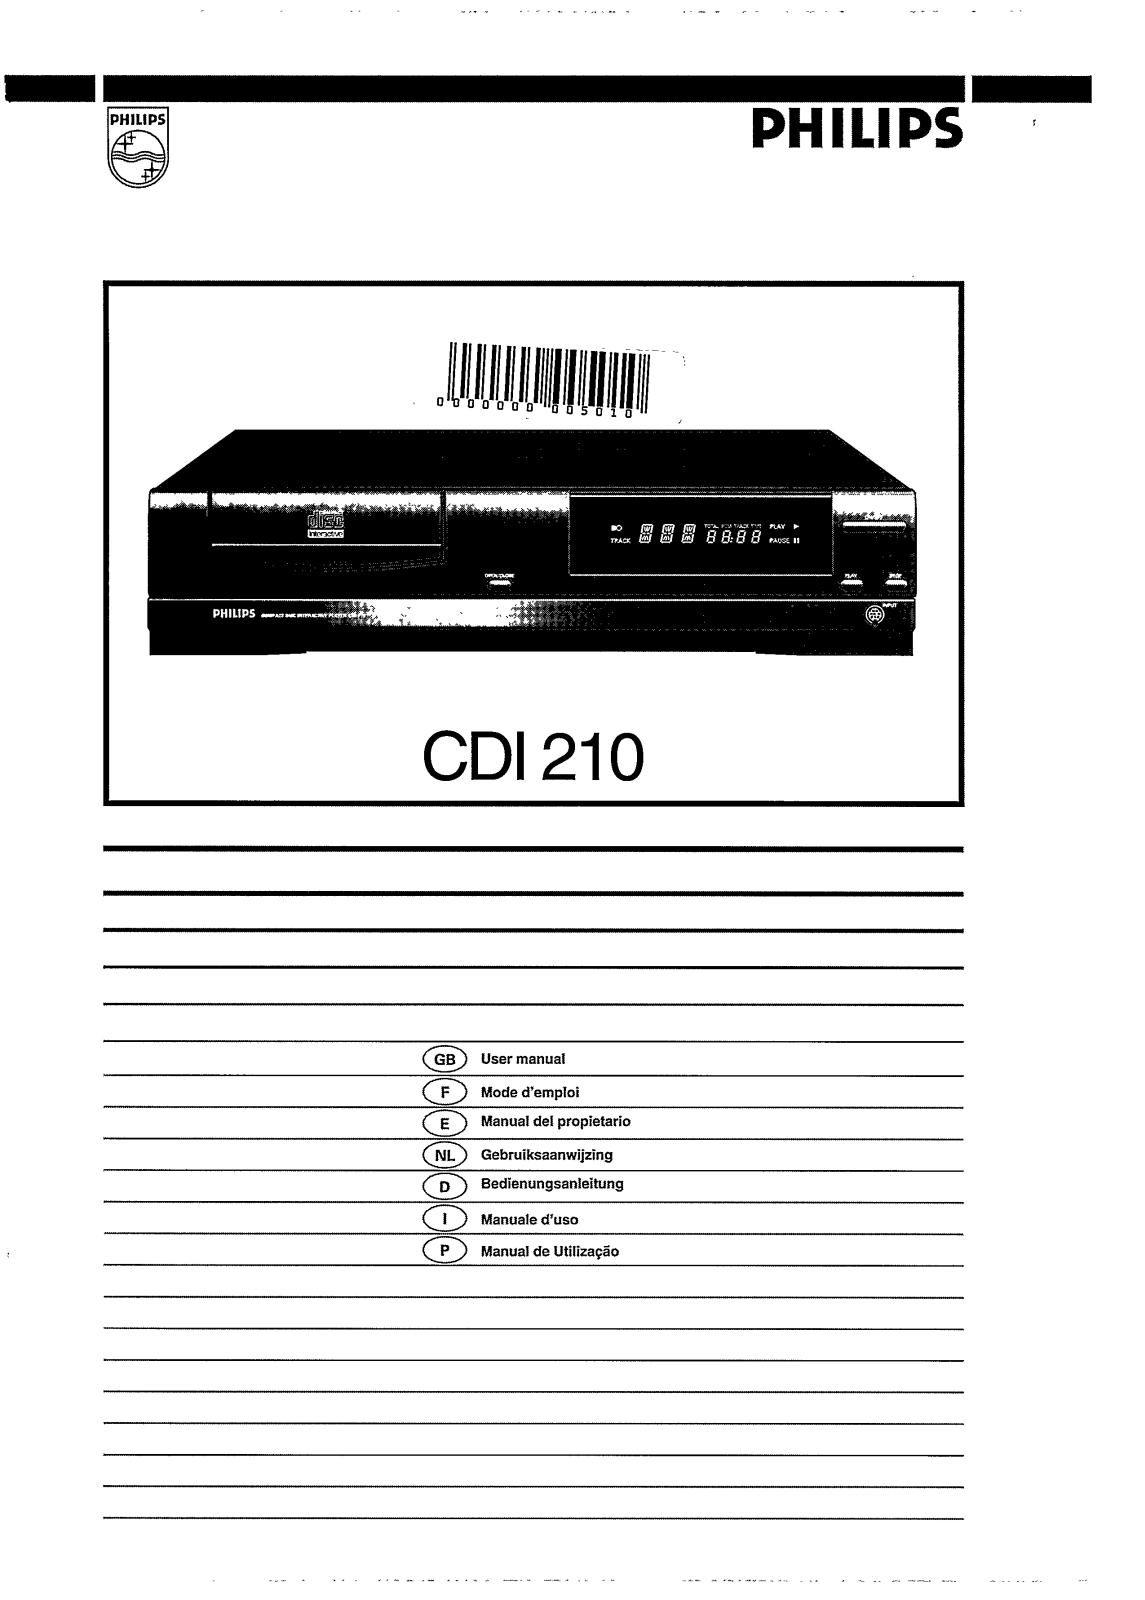 PHILIPS CDI210 User Manual